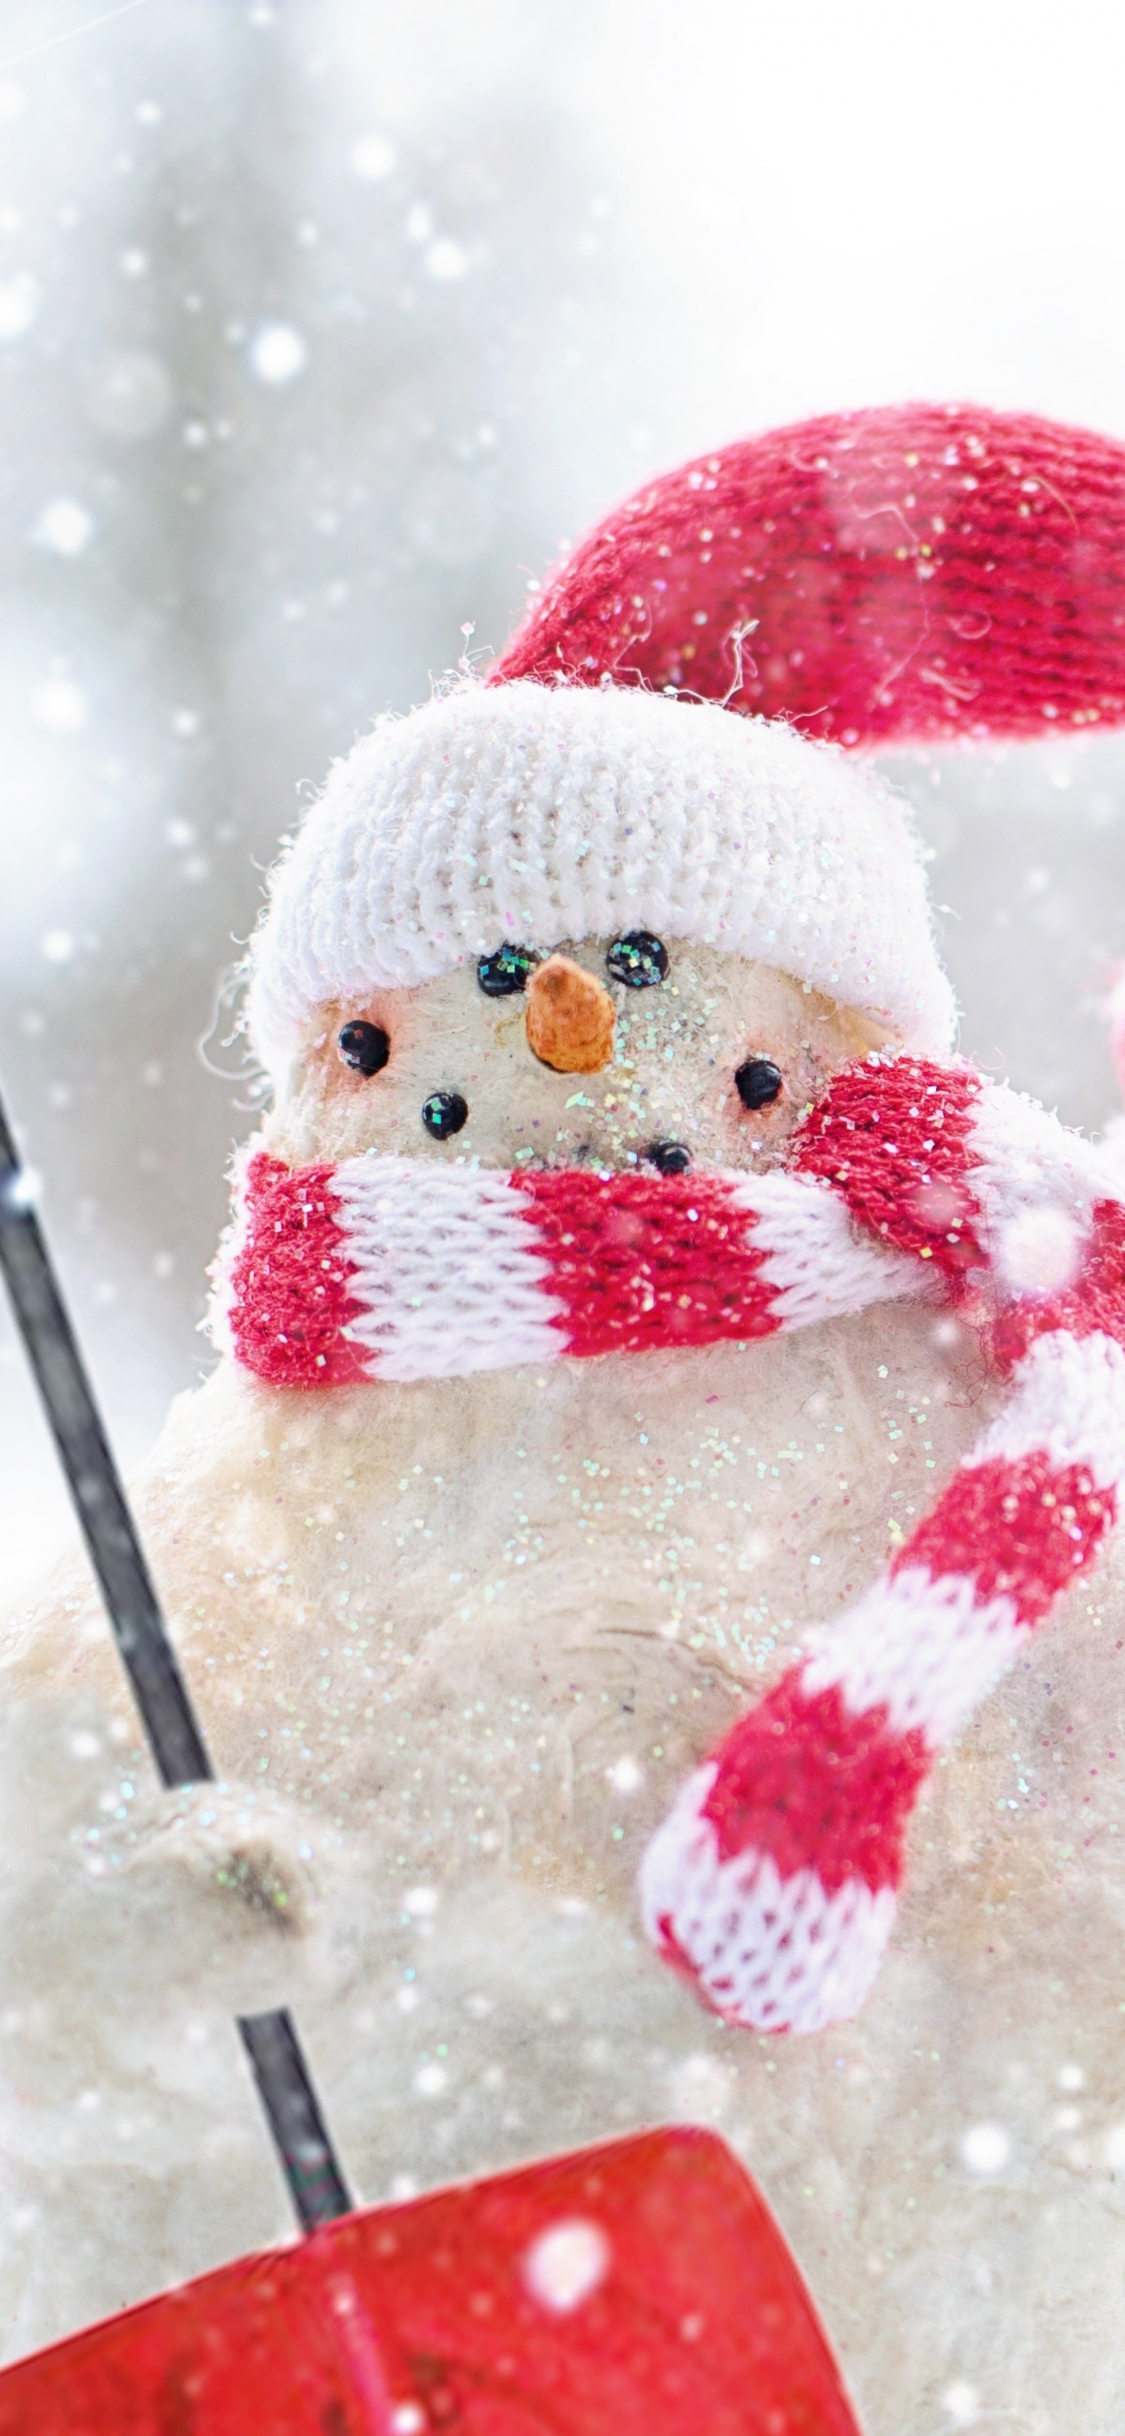 Wallpaper ID 320265  Holiday Christmas Phone Wallpaper Snowman  1440x2960 free download